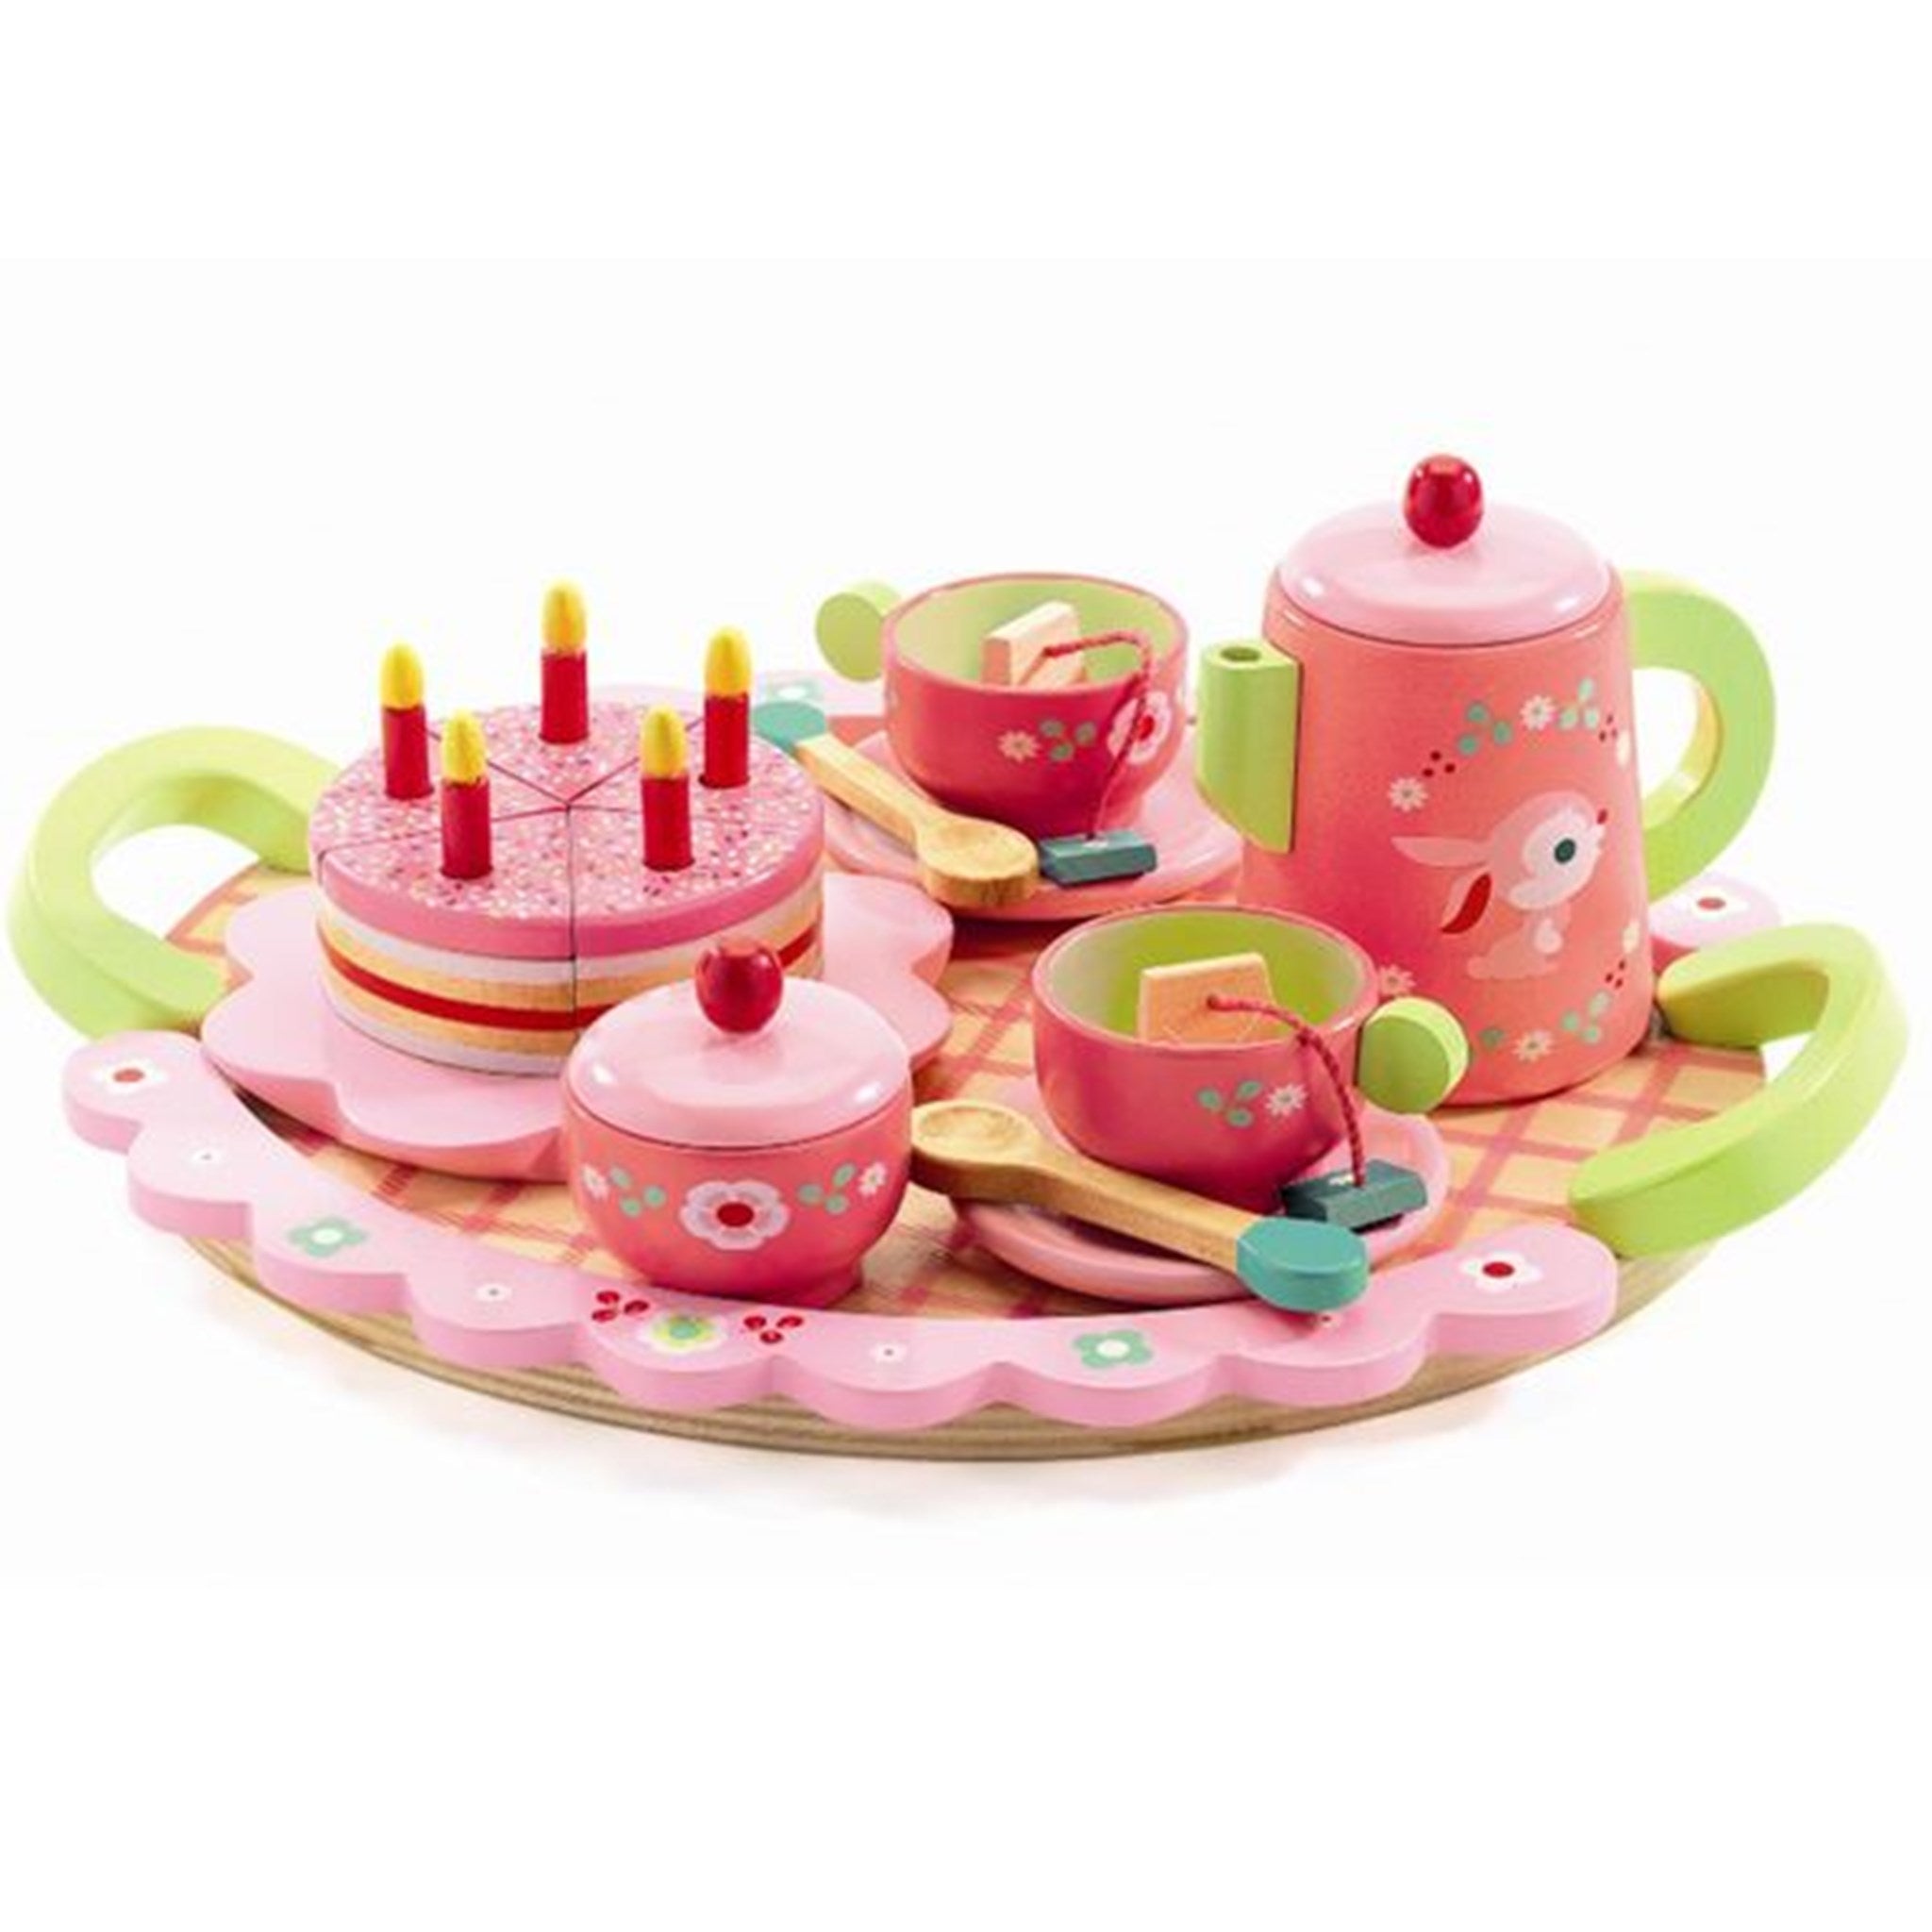 Djeco Role Play Lilli Rose Tea And Cake set